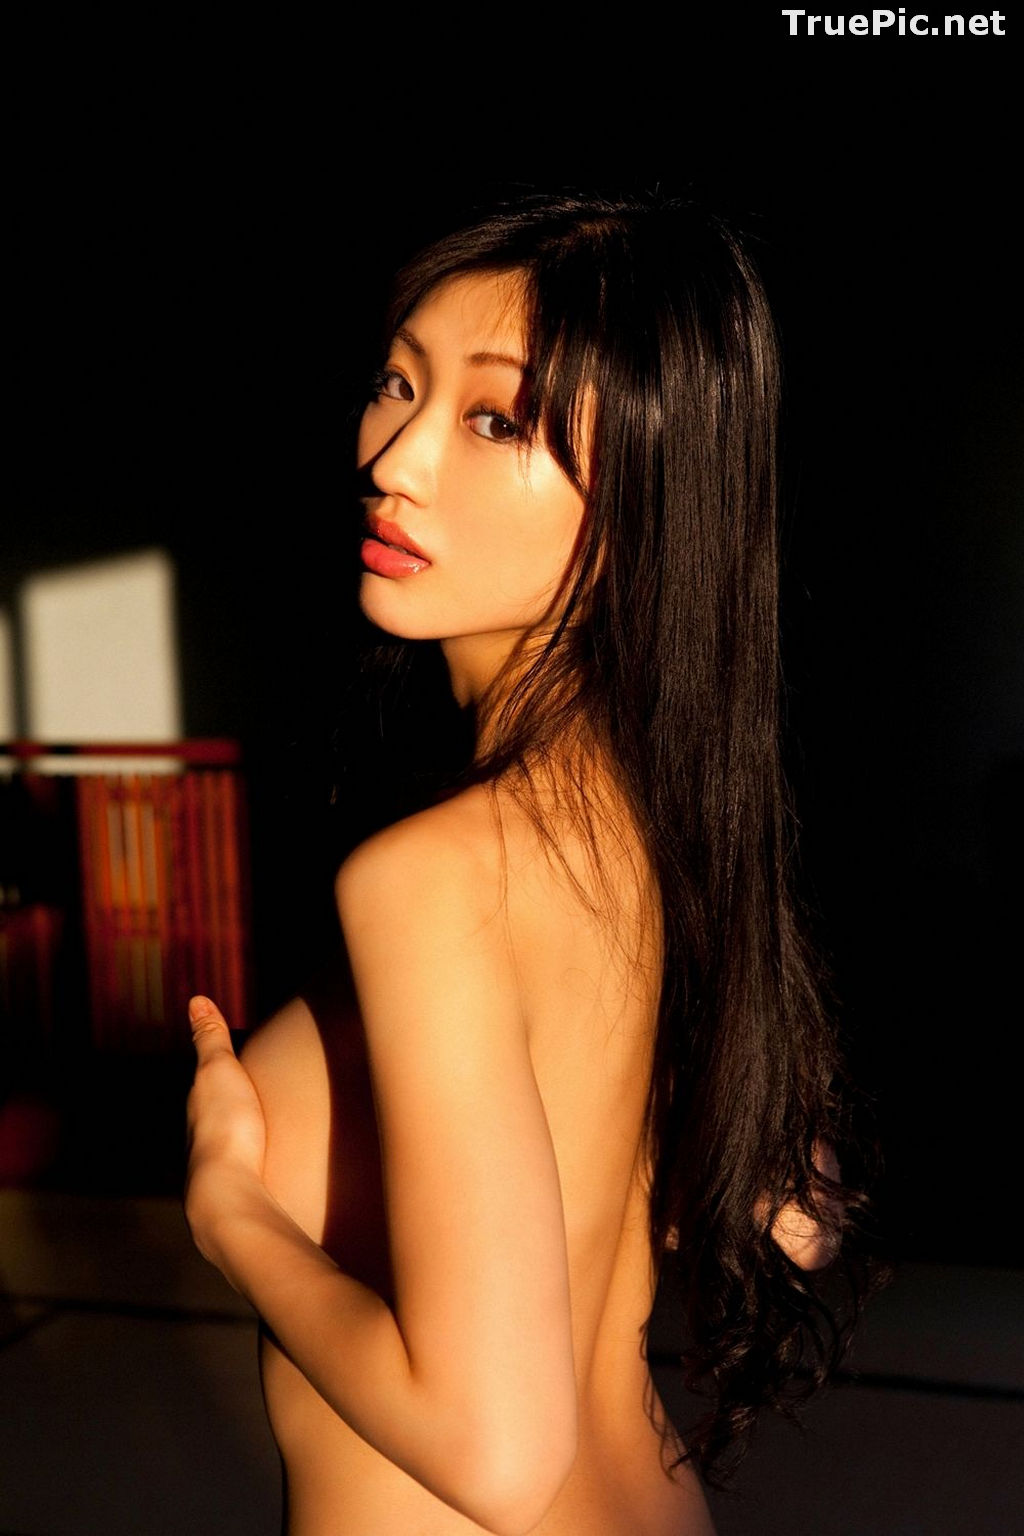 Image [YS Web] Vol.525 - Japanese Actress and Gravure Idol - Mitsu Dan - TruePic.net - Picture-77